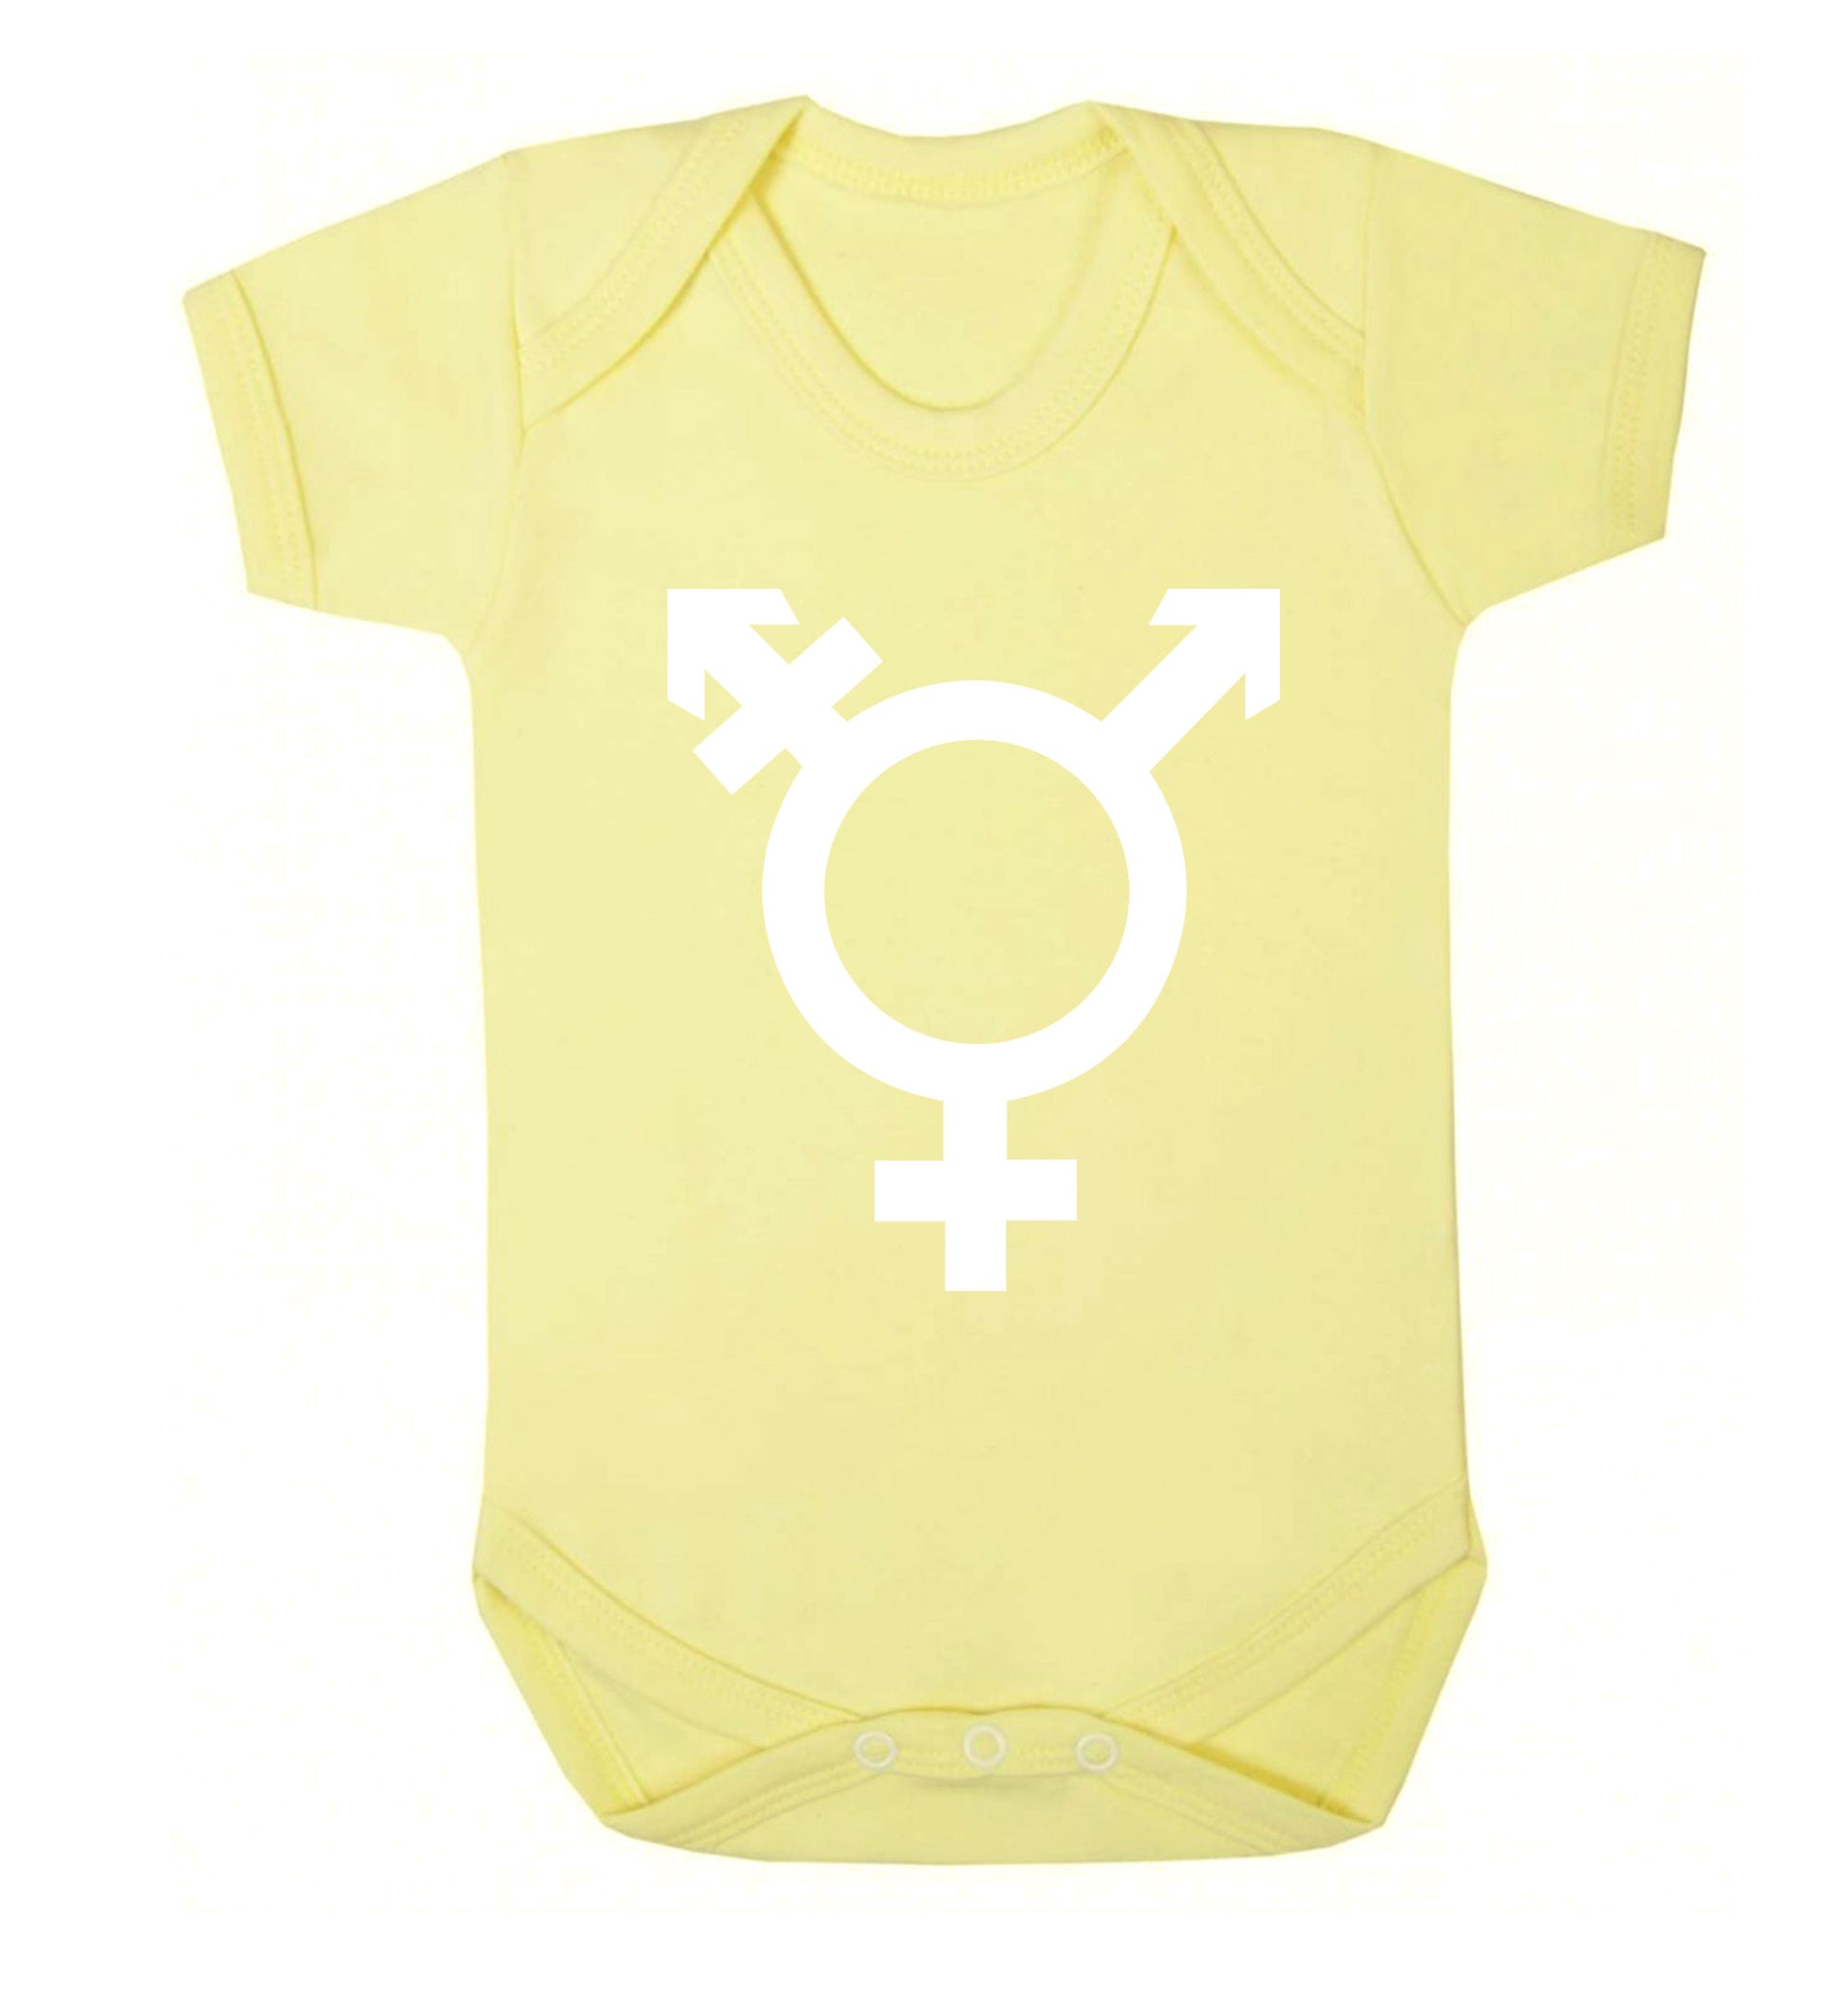 Gender neutral symbol large Baby Vest pale yellow 18-24 months